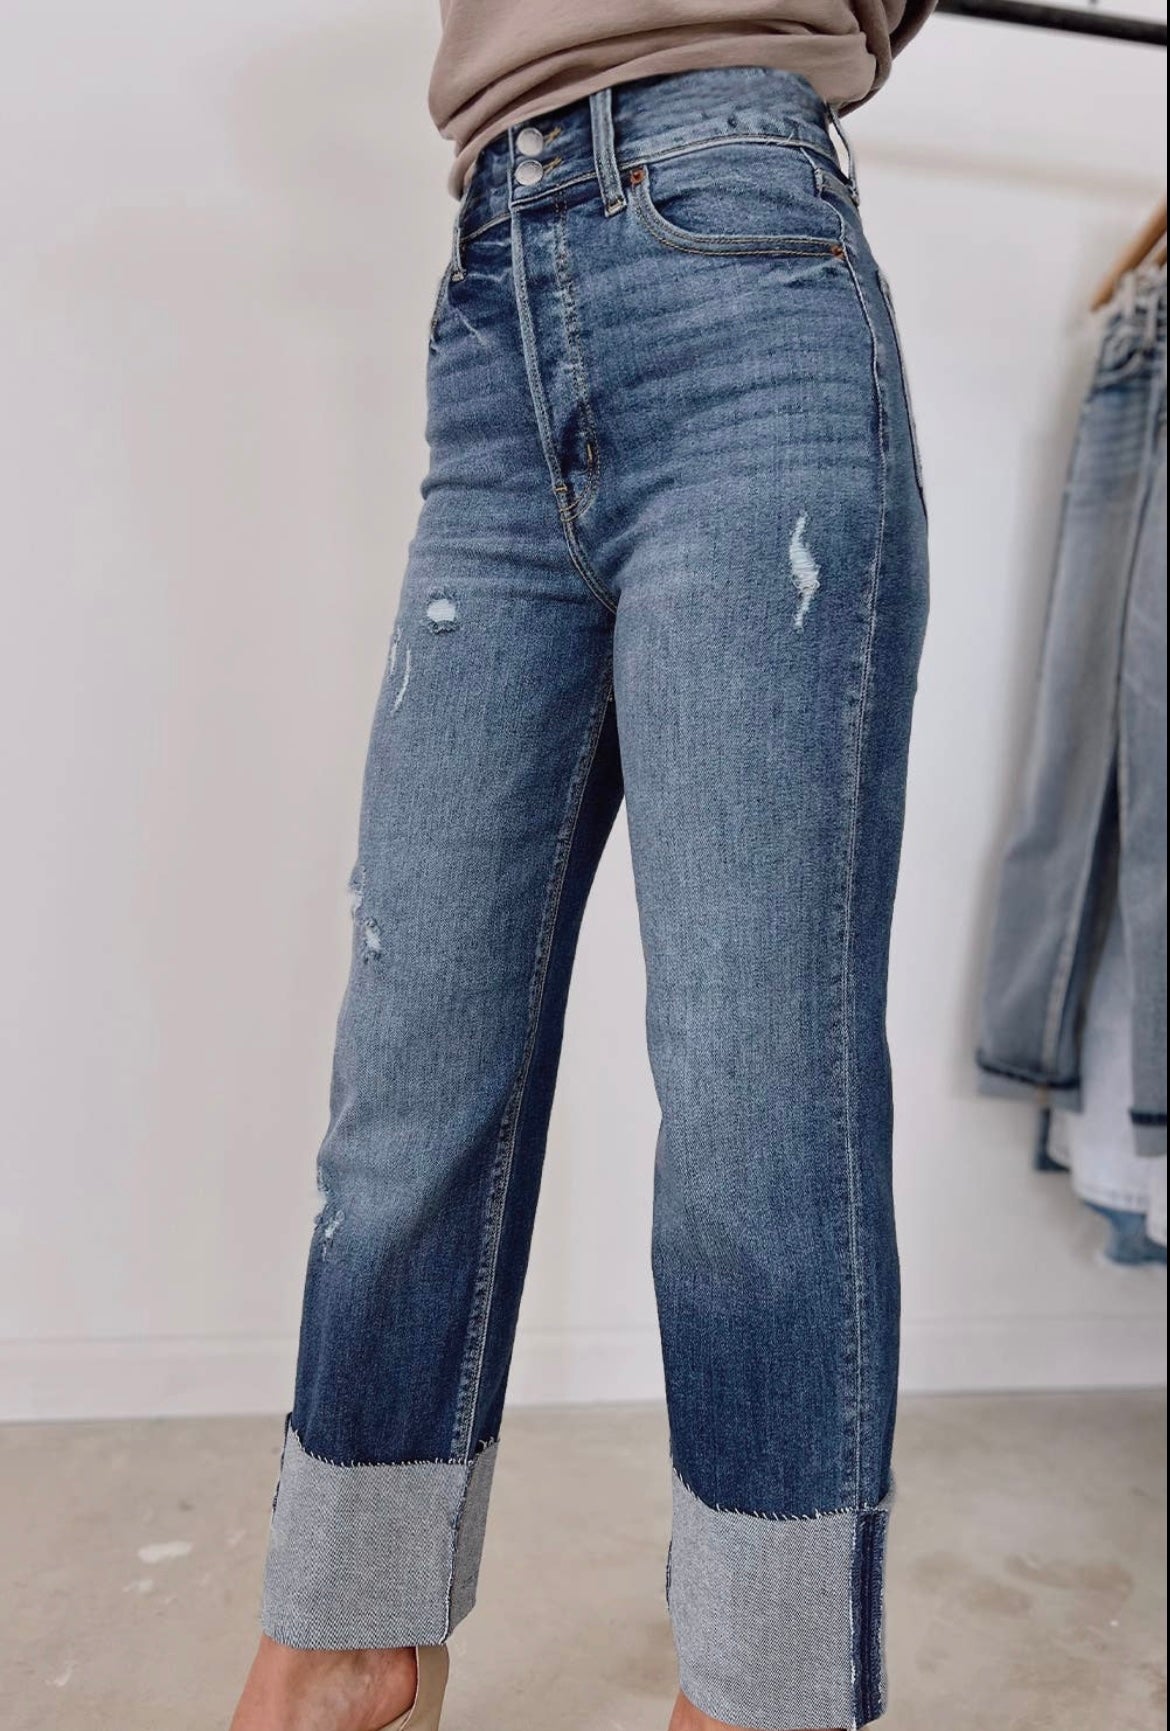 Cuffed Distressed Jeans